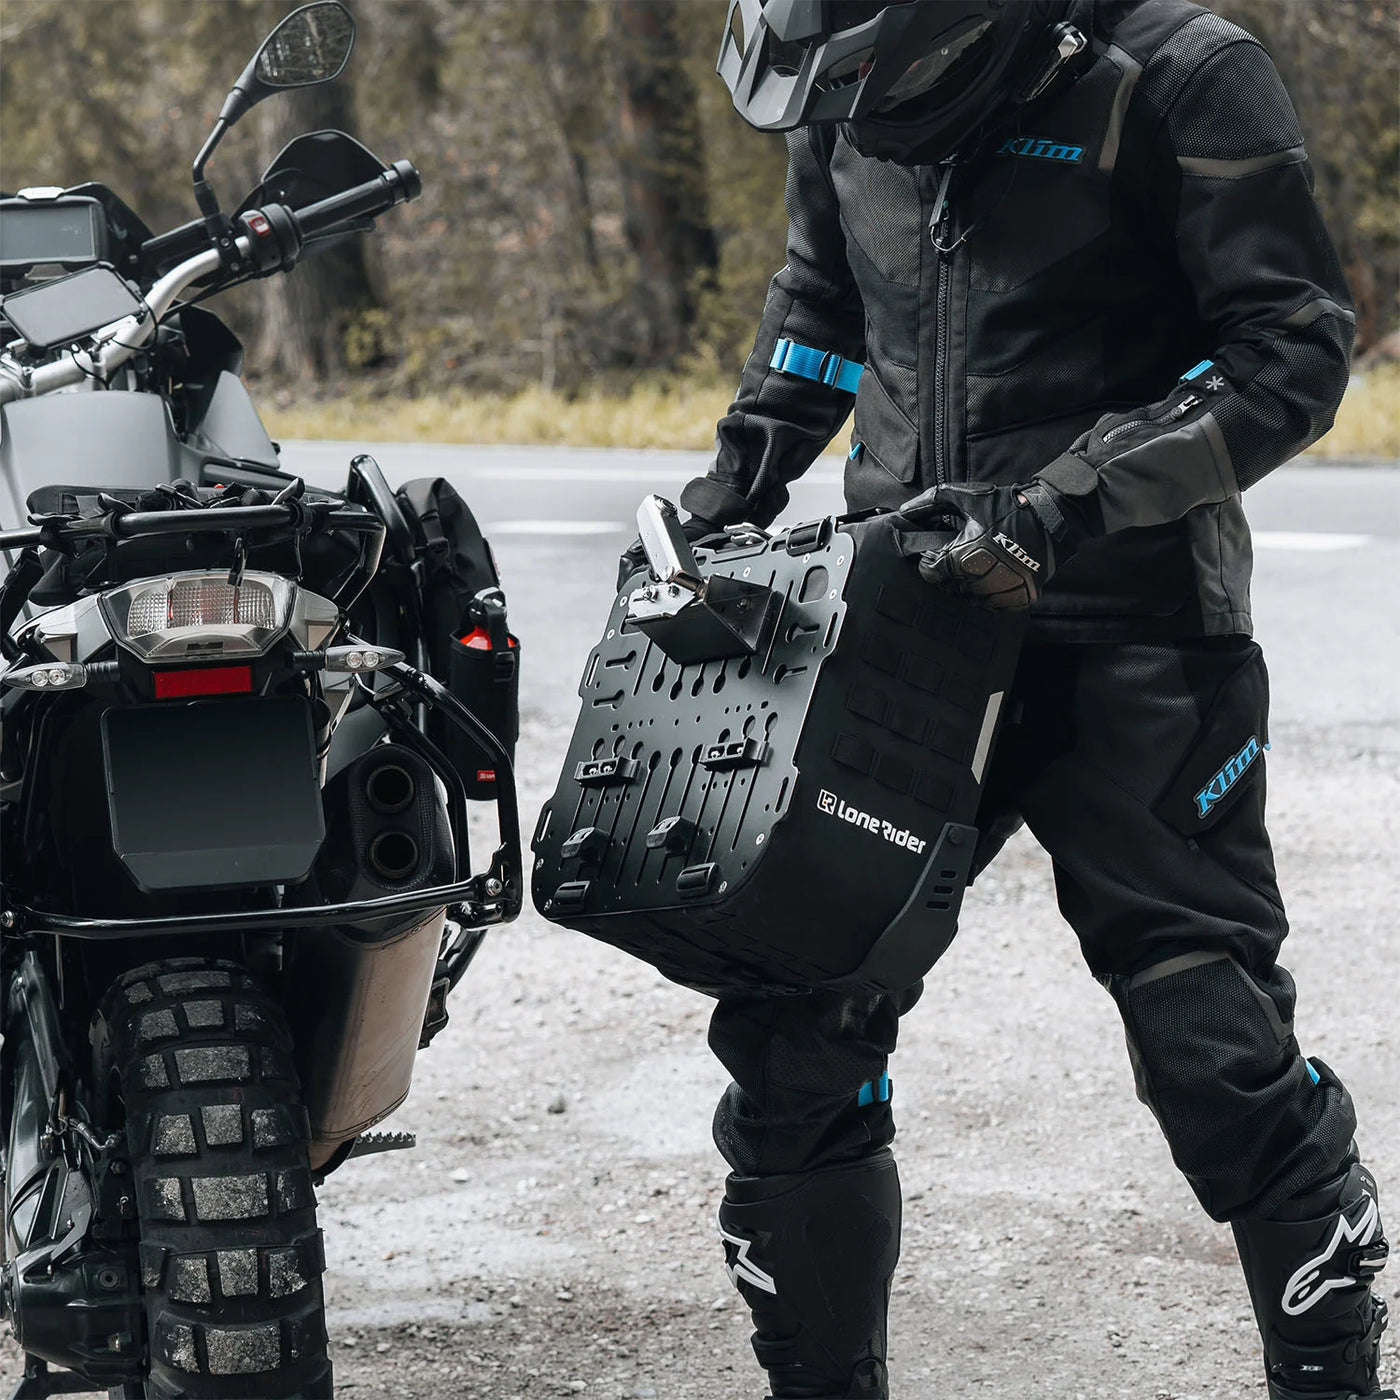 Lone Rider MotoBags - Semi-Rigid Motorcycle Bags